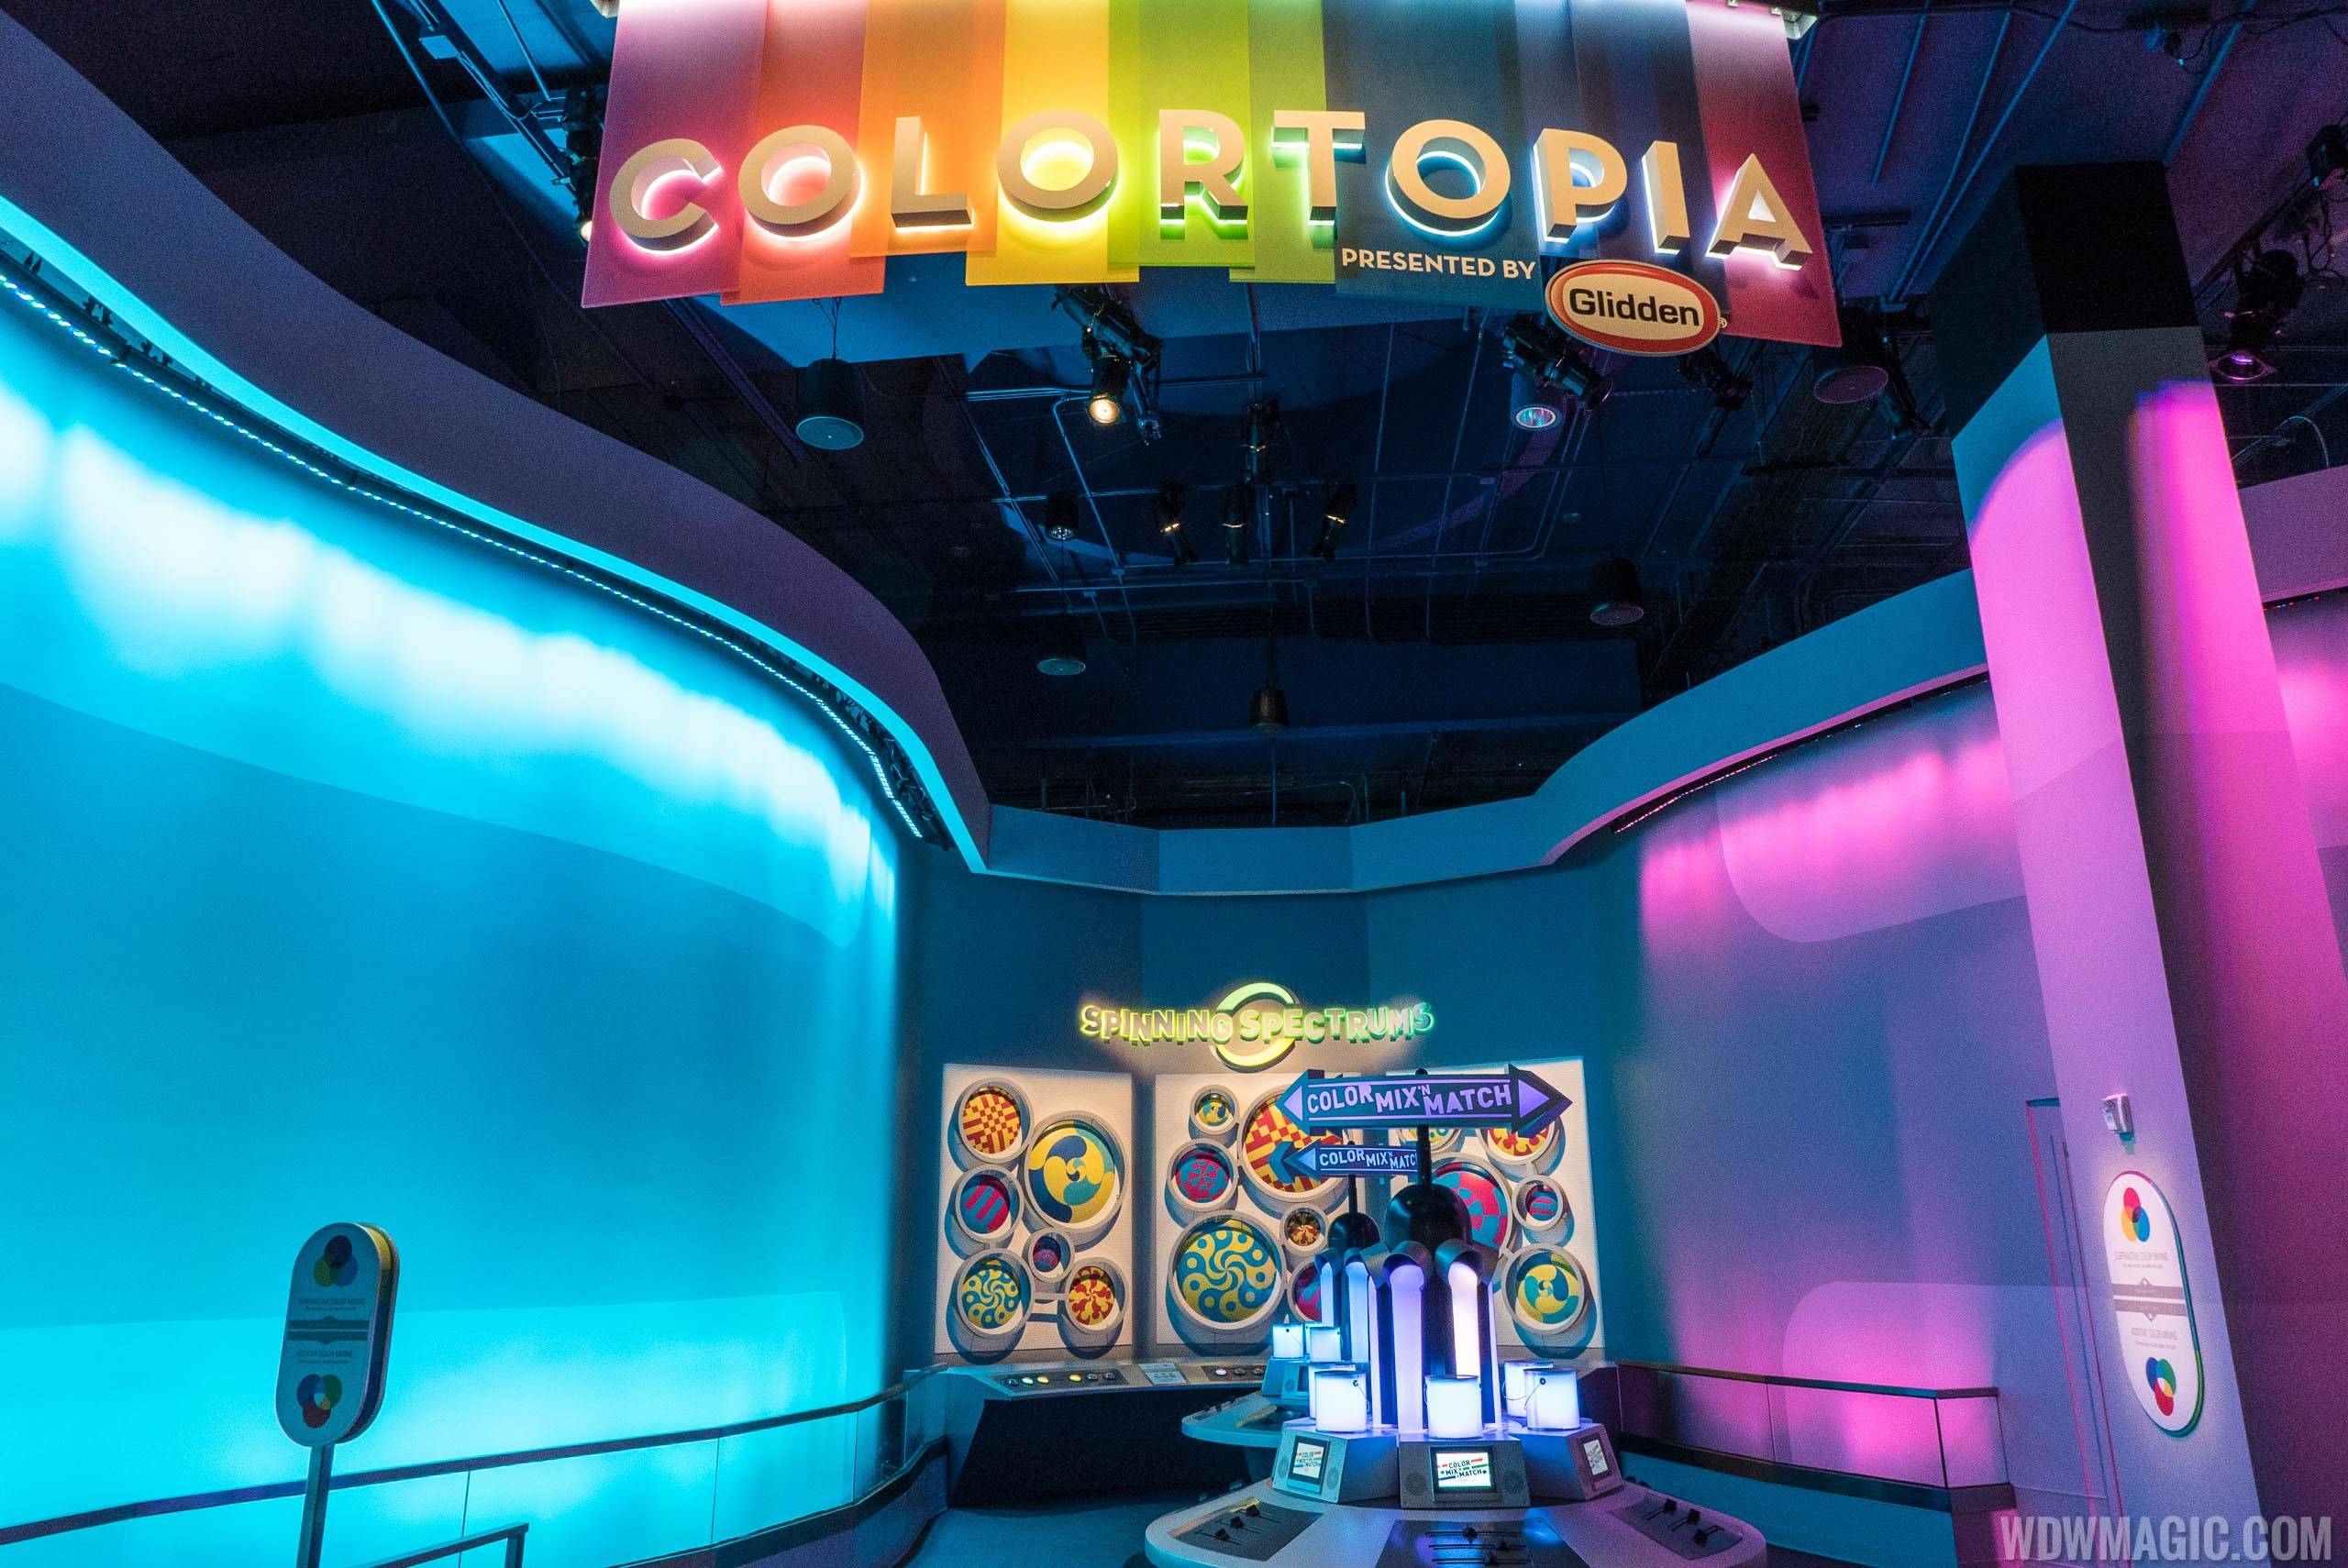 Colortopia exhibit